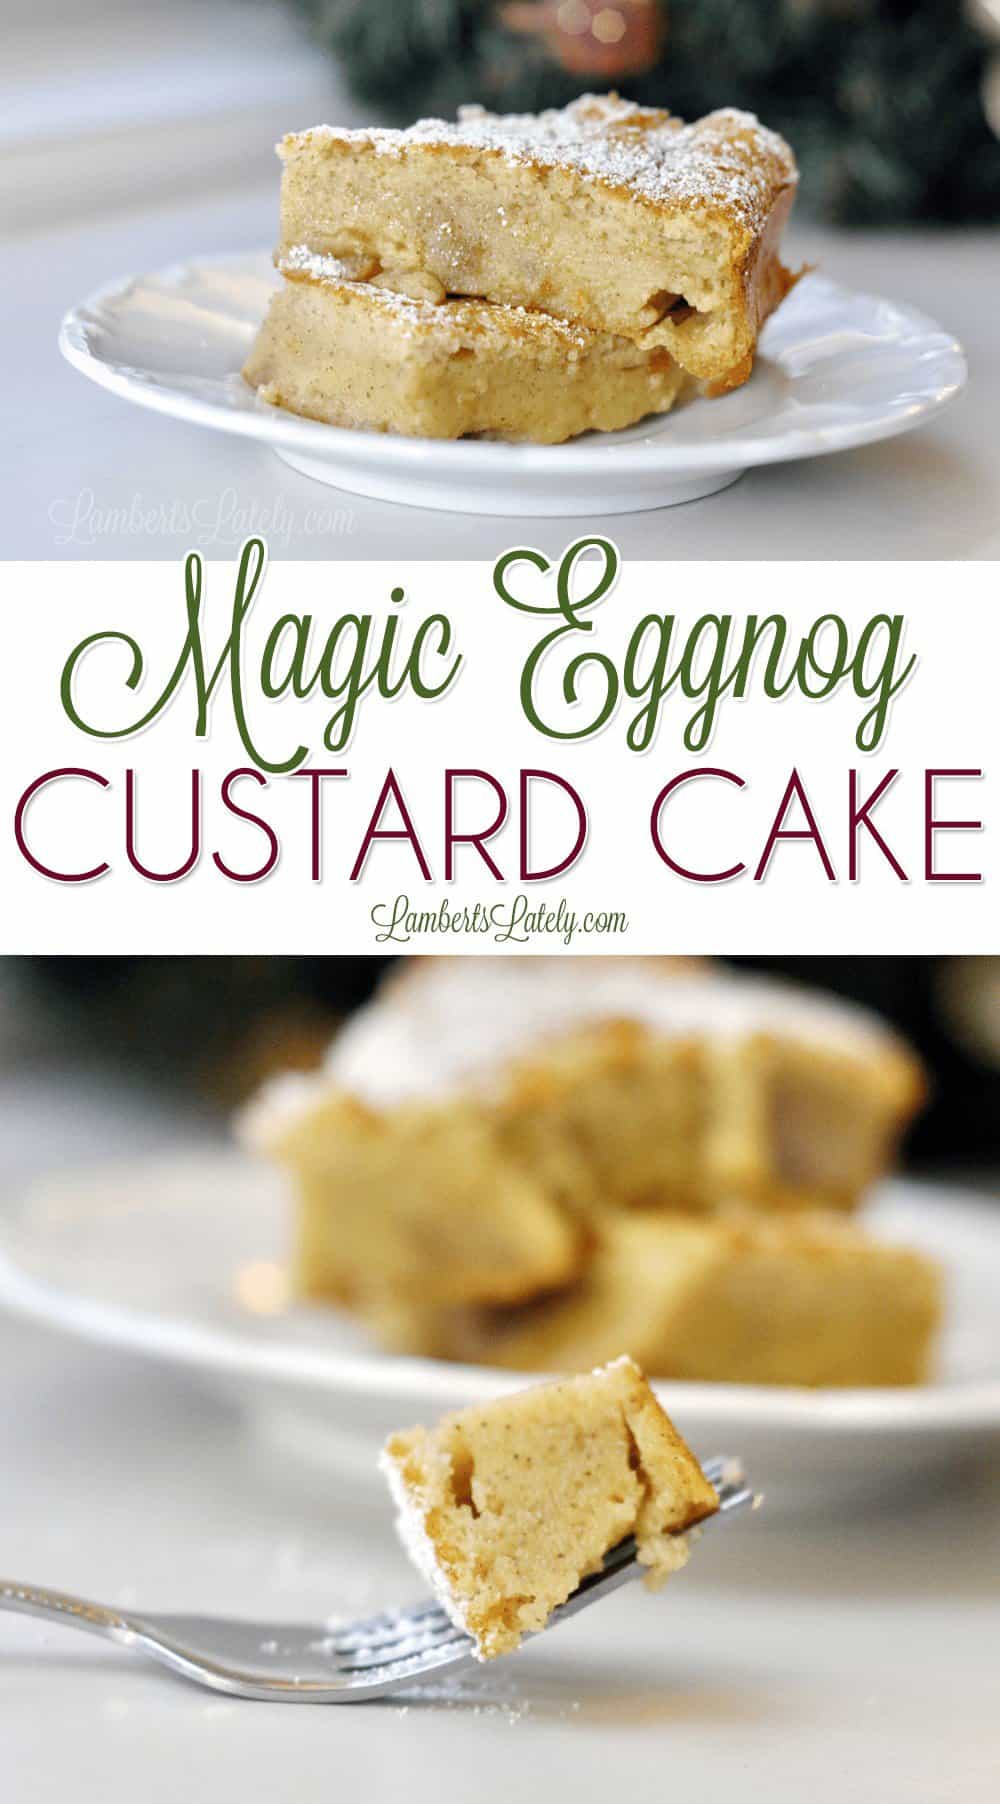 Magic Custard Eggnog Cake